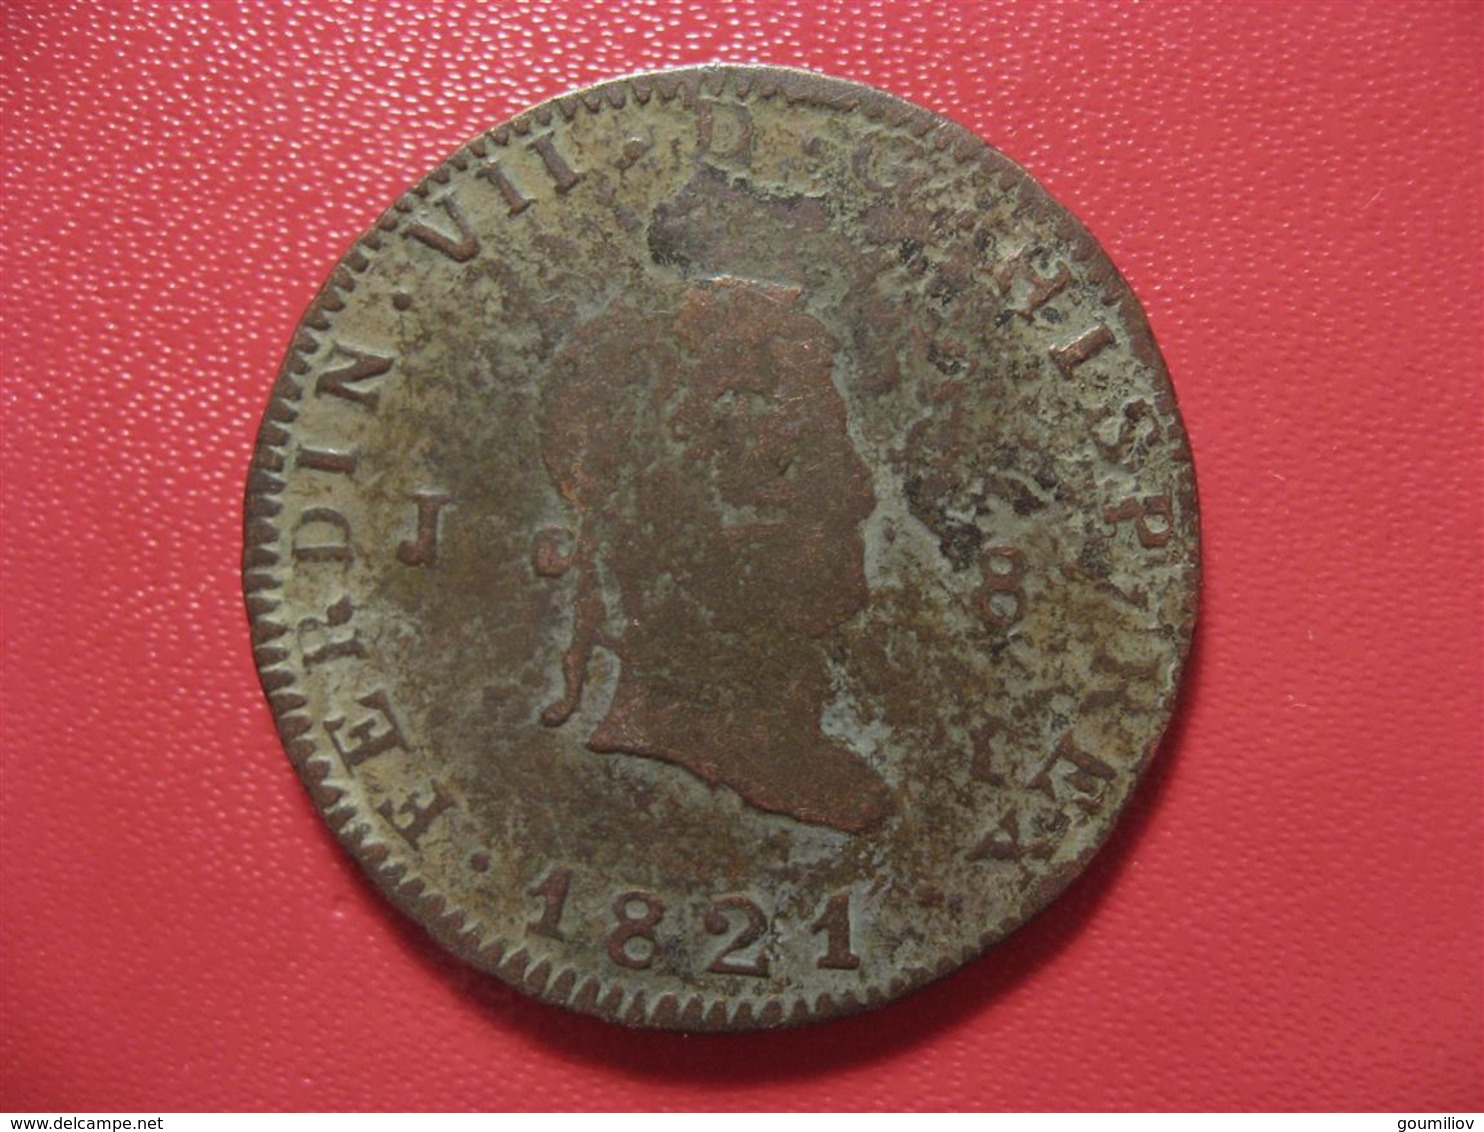 Espagne - 8 Maravedis 1821 2985 - First Minting